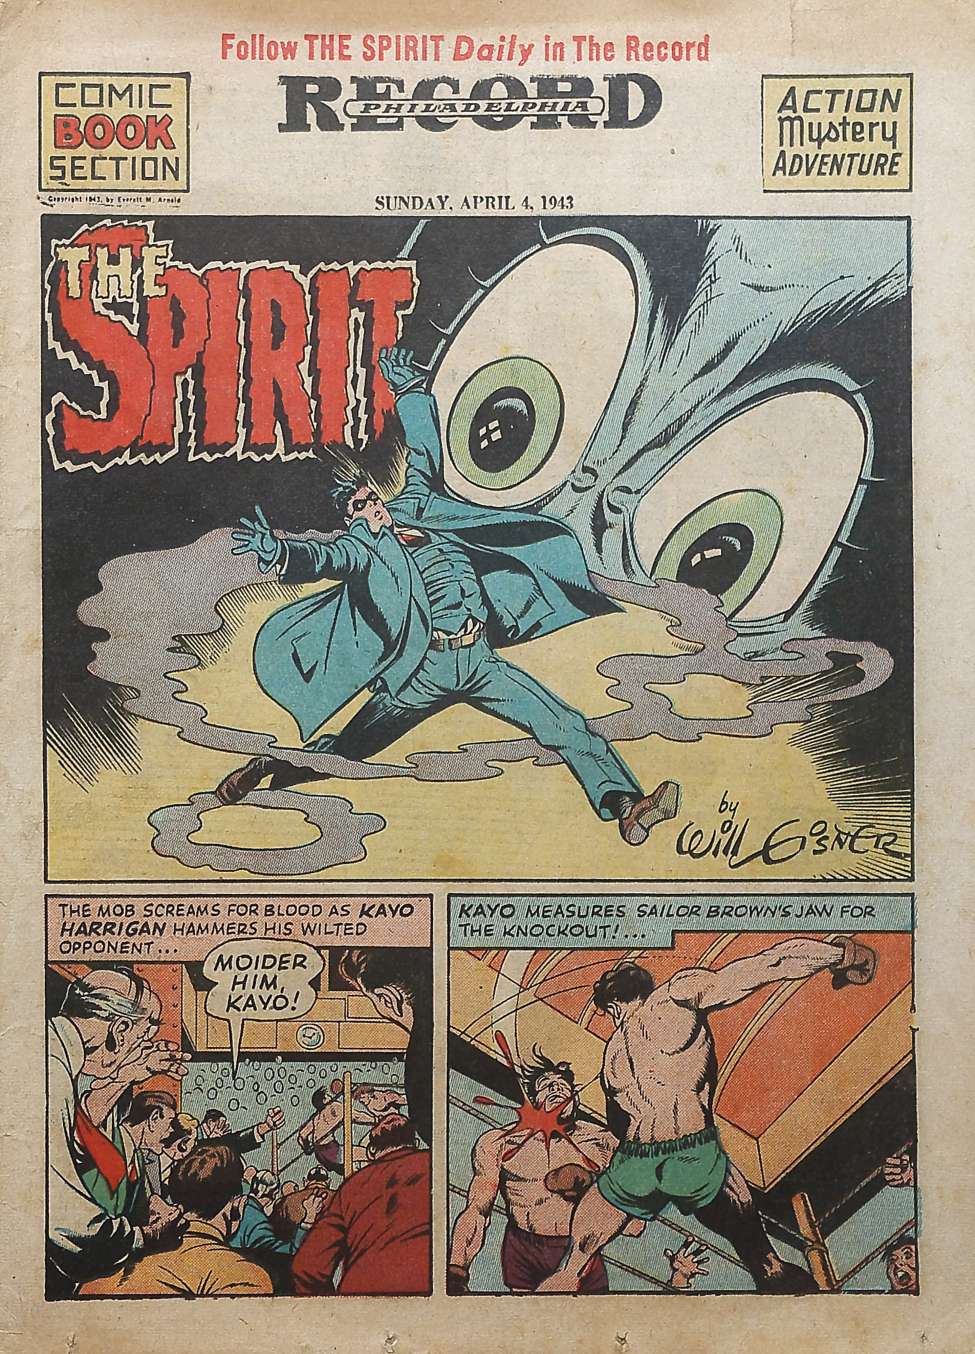 Book Cover For The Spirit (1943-04-04) - Philadelphia Record